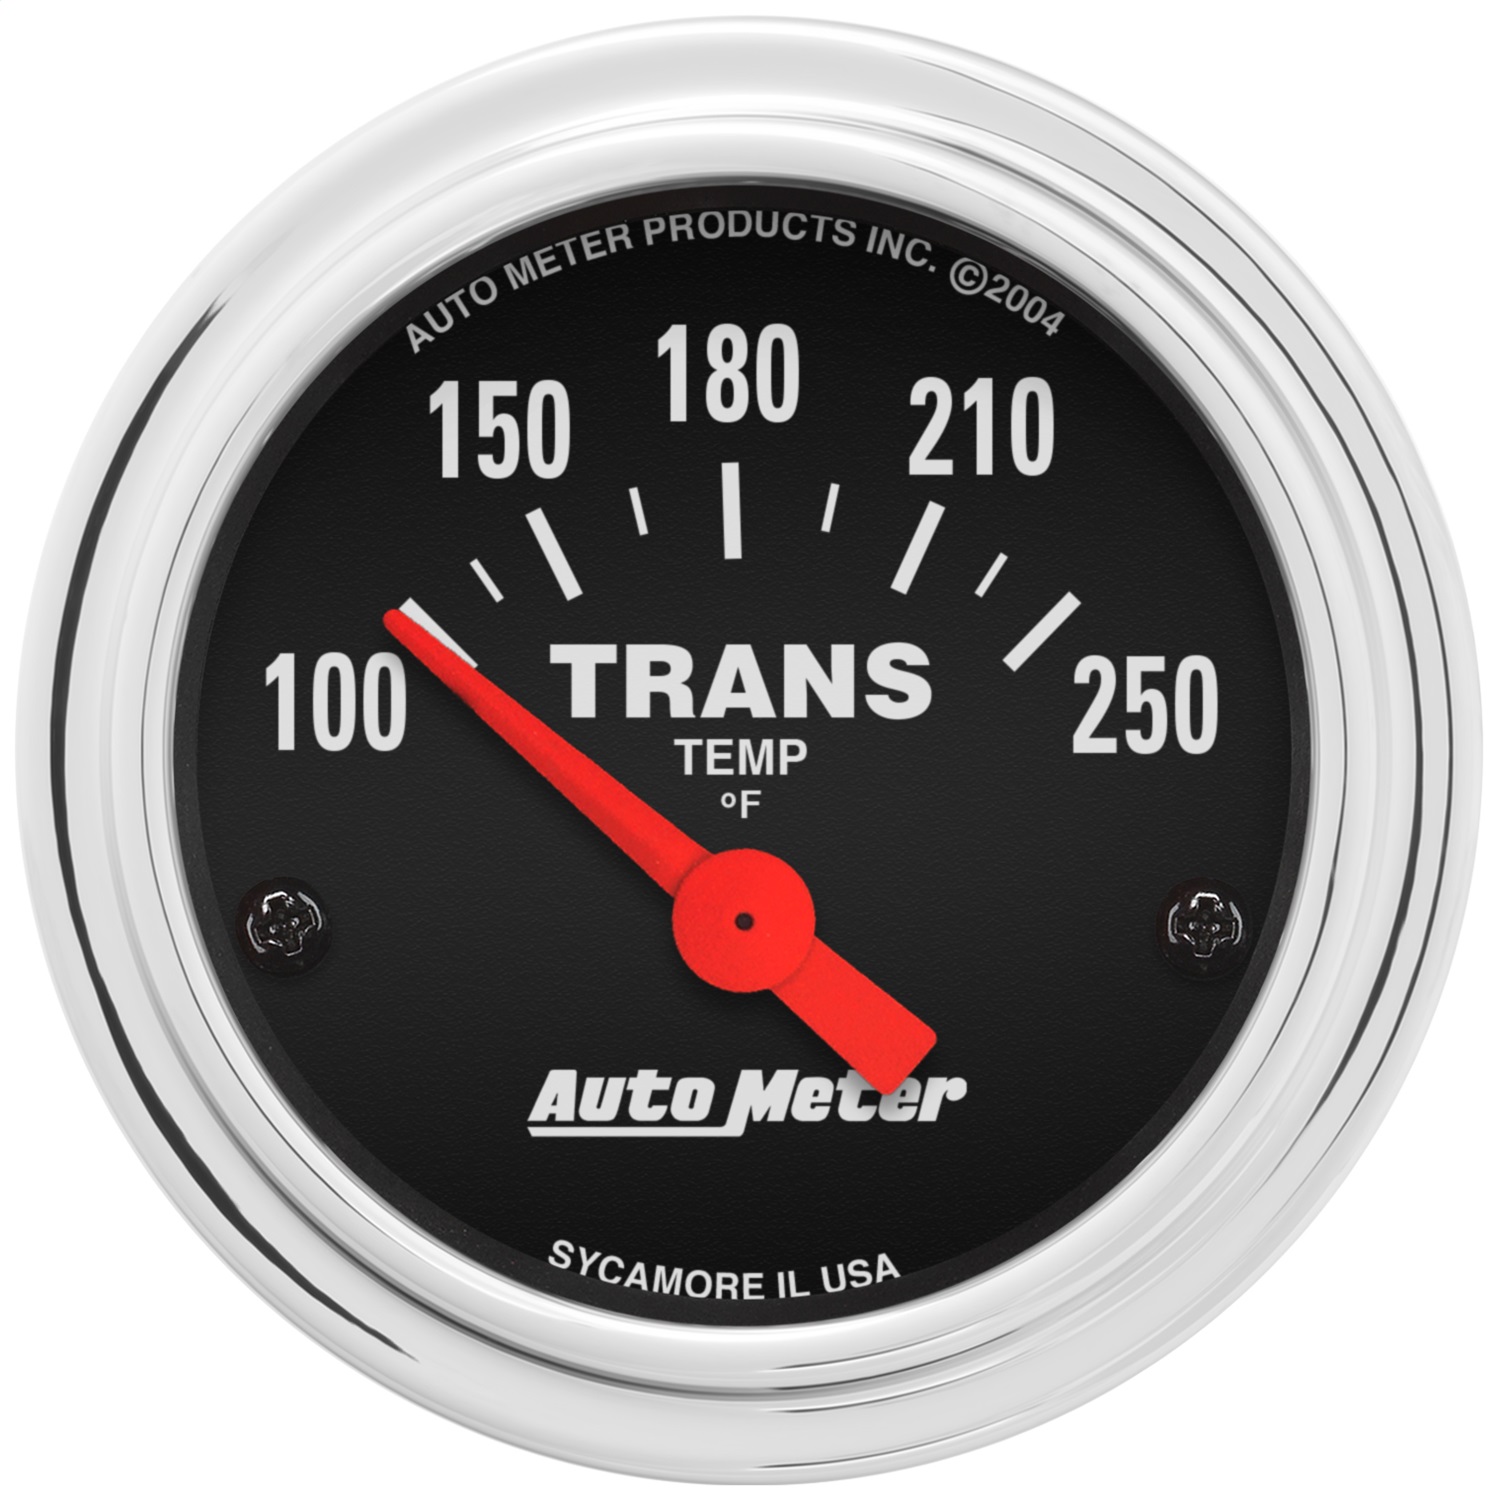 Auto Meter Auto Meter 2552 Traditional Chrome Electric Transmission Temperature Gauge